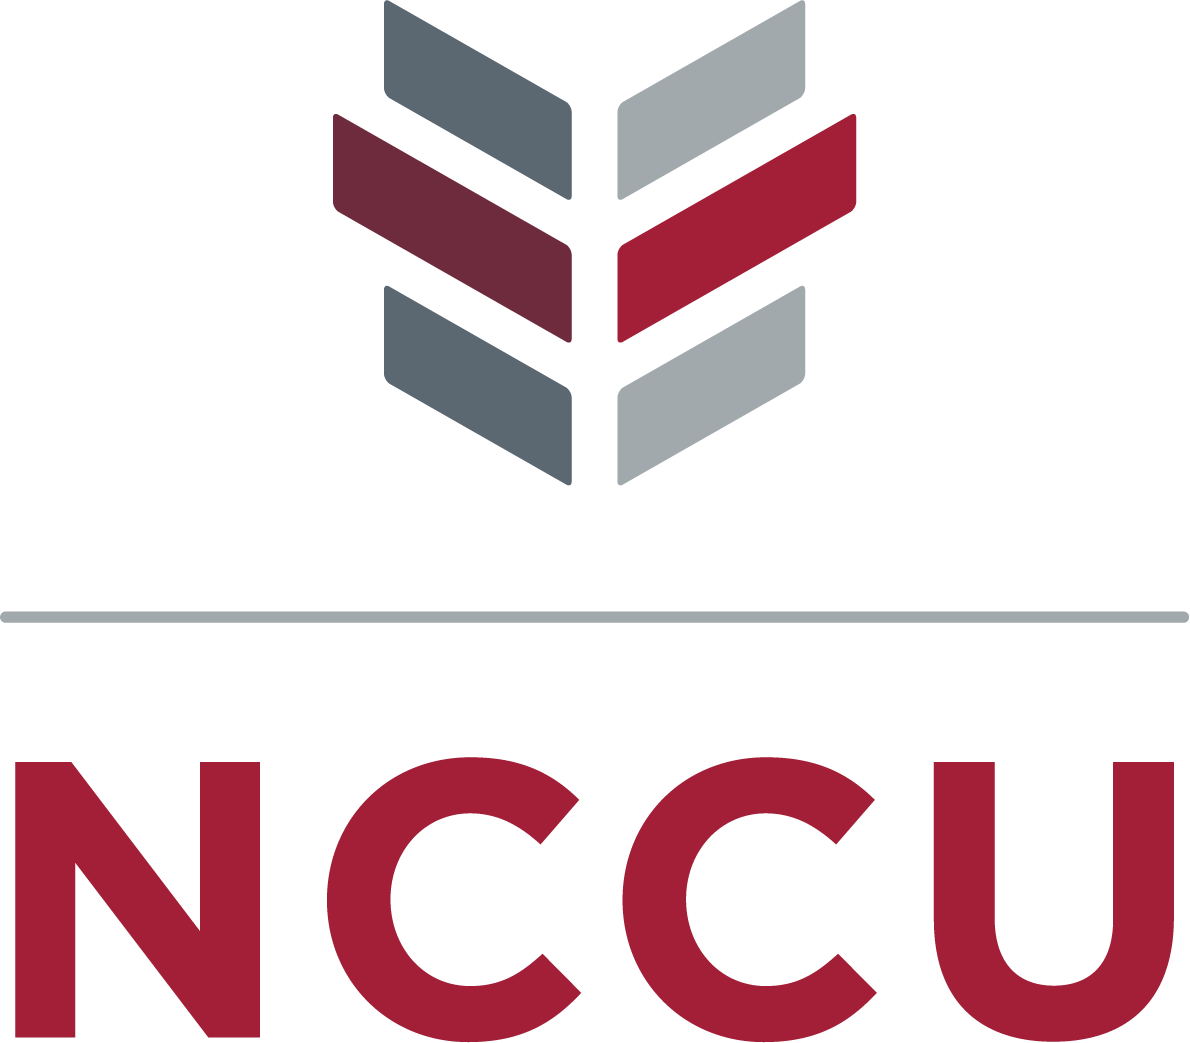 North Carolina Central University (NCCU) Scholarship programs